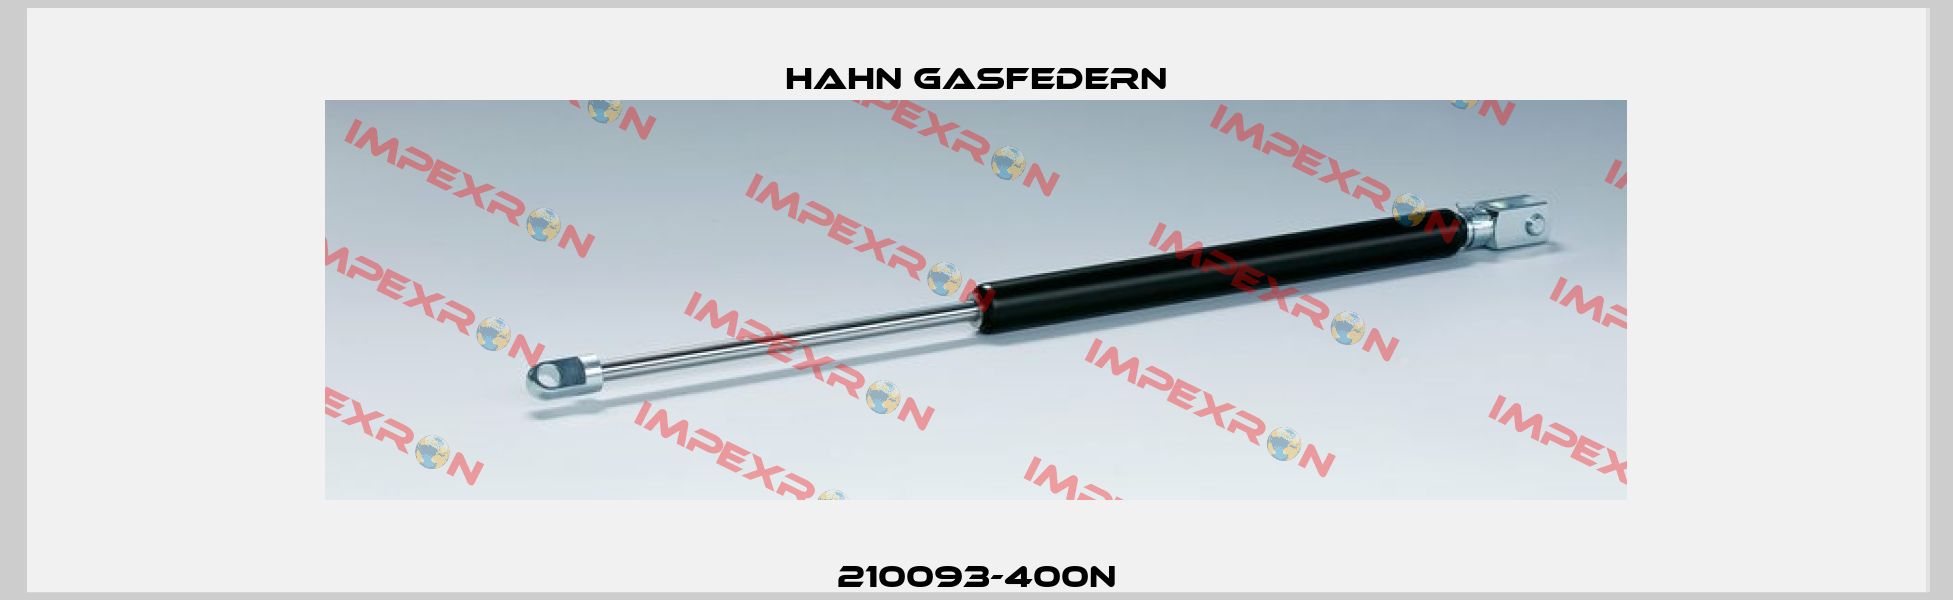 210093-400N Hahn Gasfedern